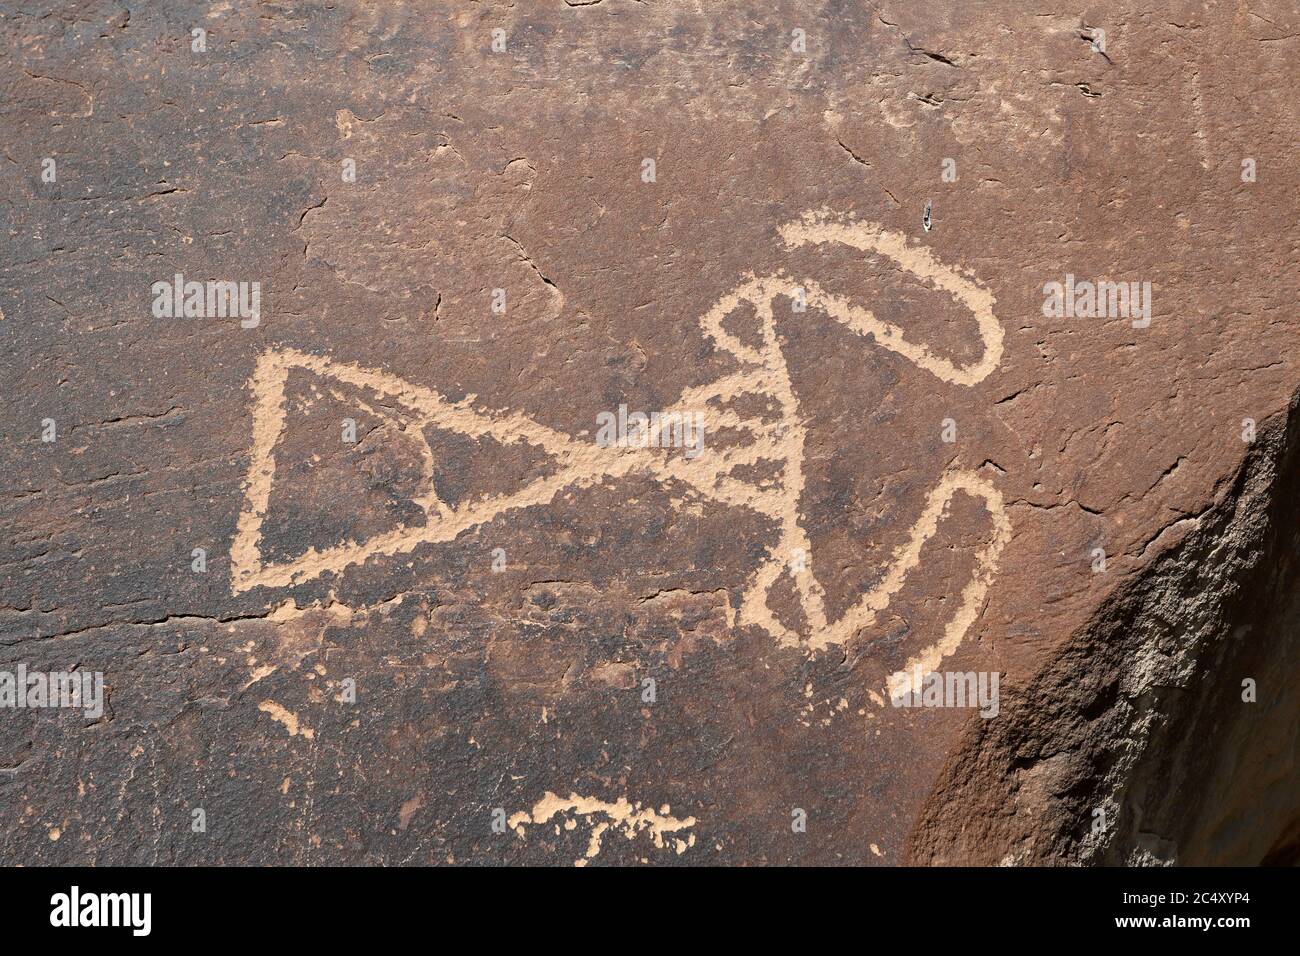 Ancient Native American Indian rock art petroglyph image Utah 1465. Nine Mile Canyon, Utah. World’s longest art gallery of ancient native America Stock Photo